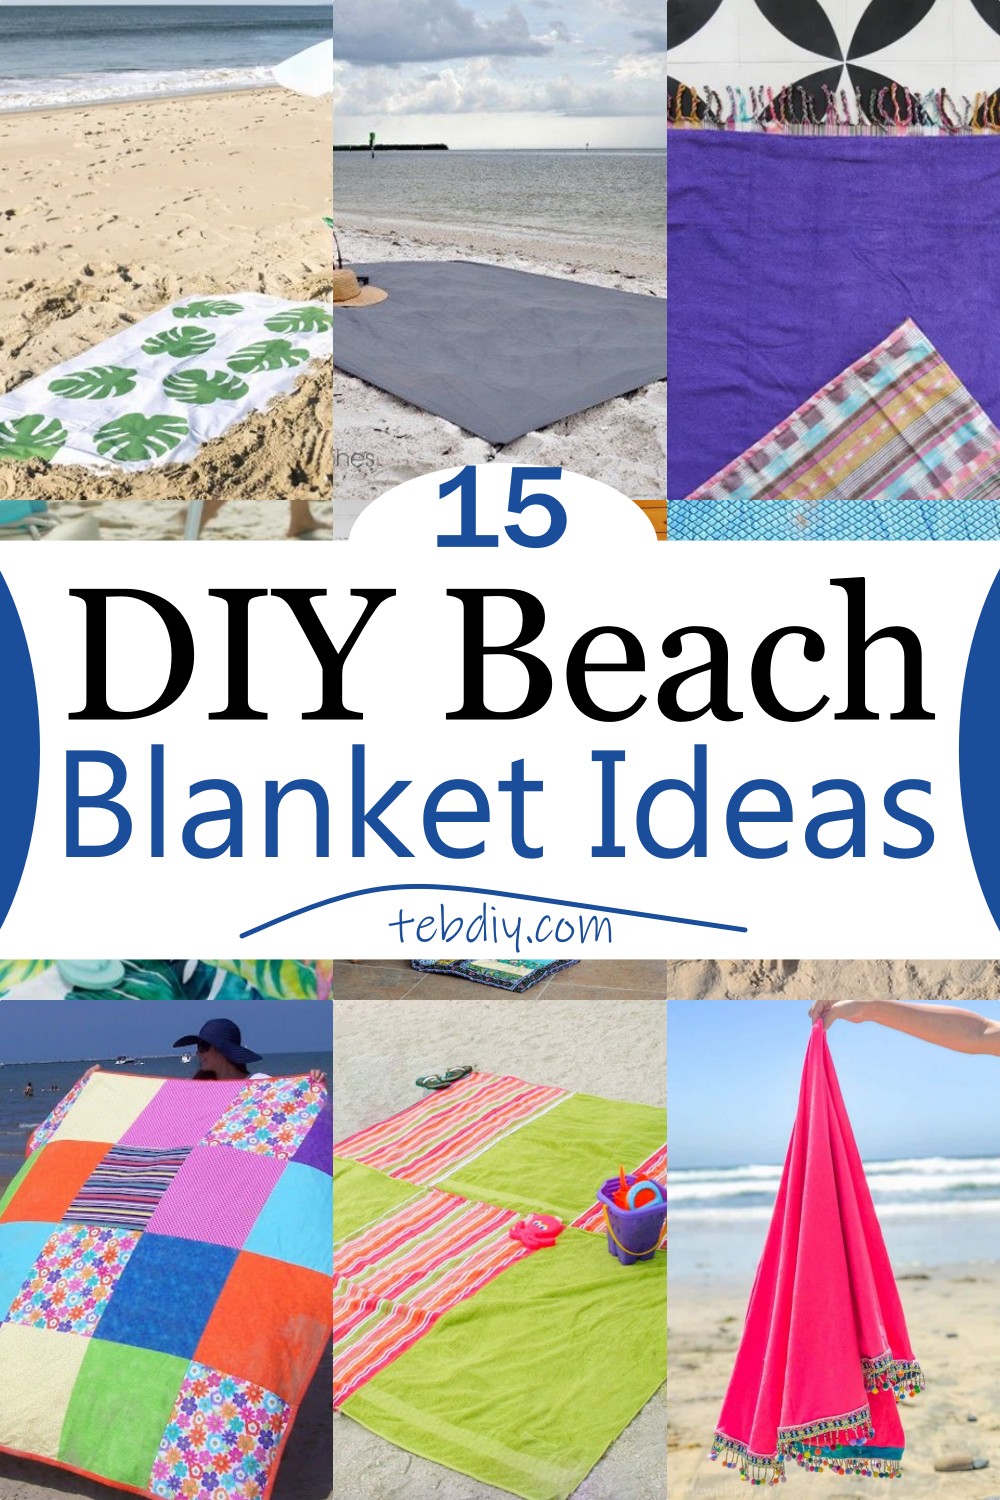 15 DIY Beach Blanket Ideas